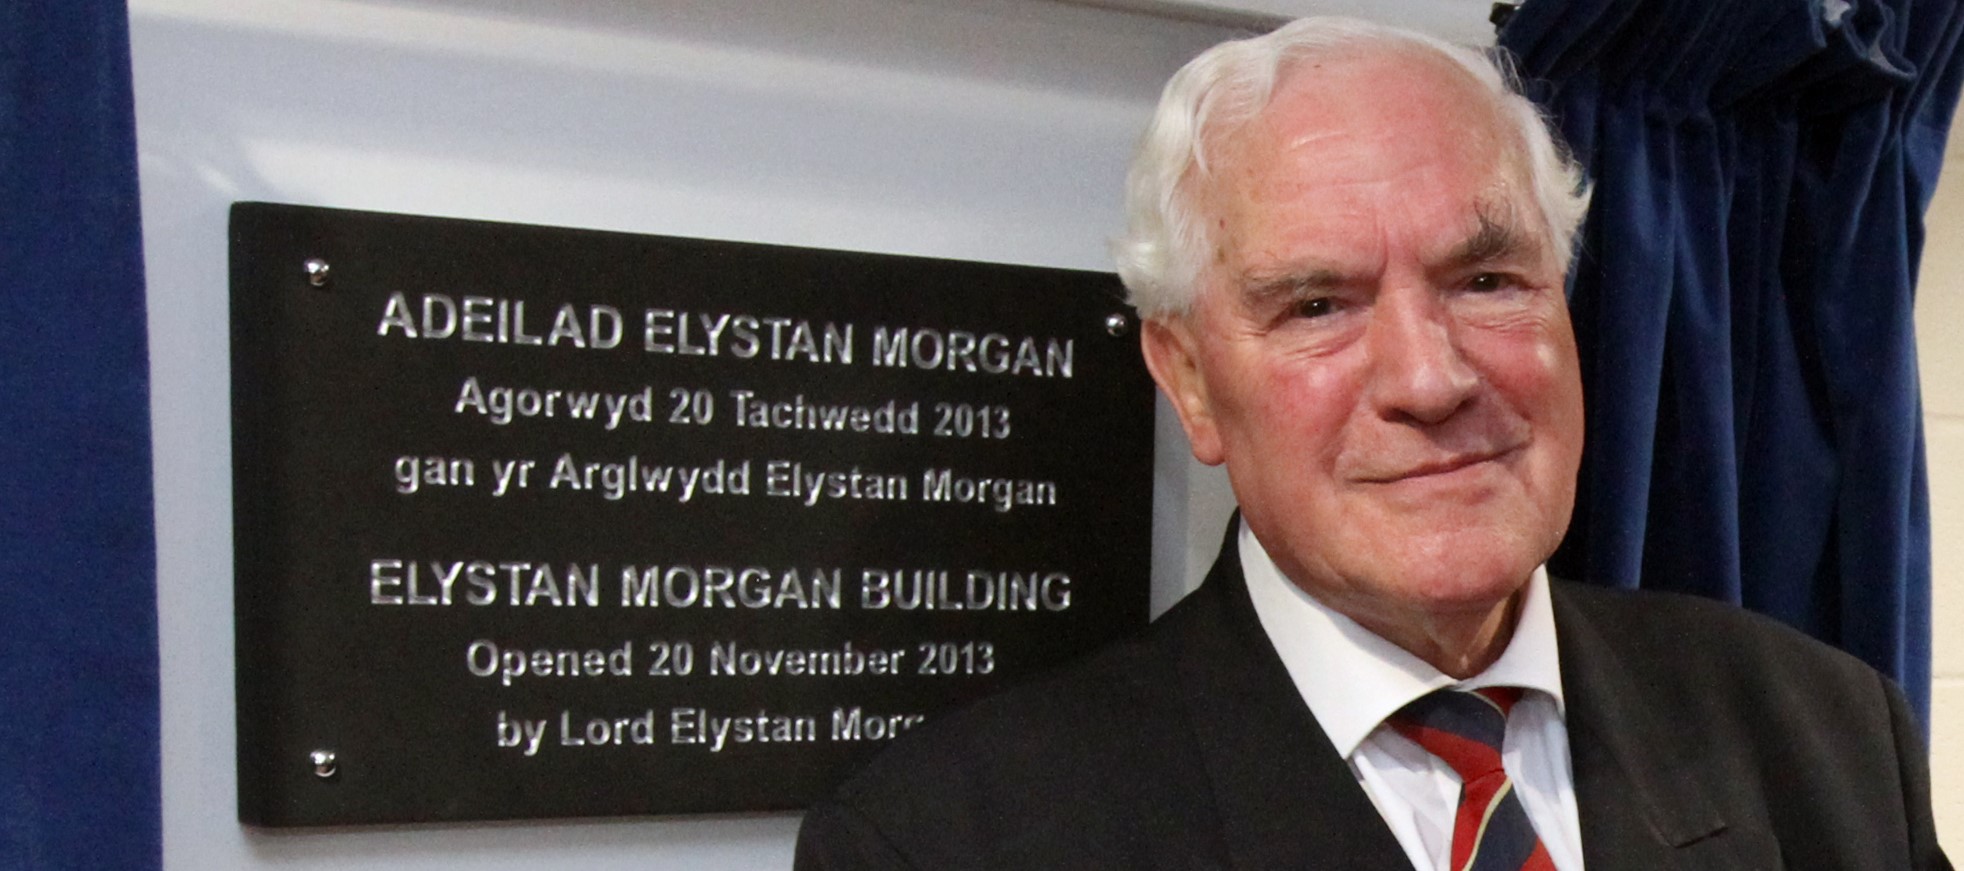 Lord Elystan Morgan